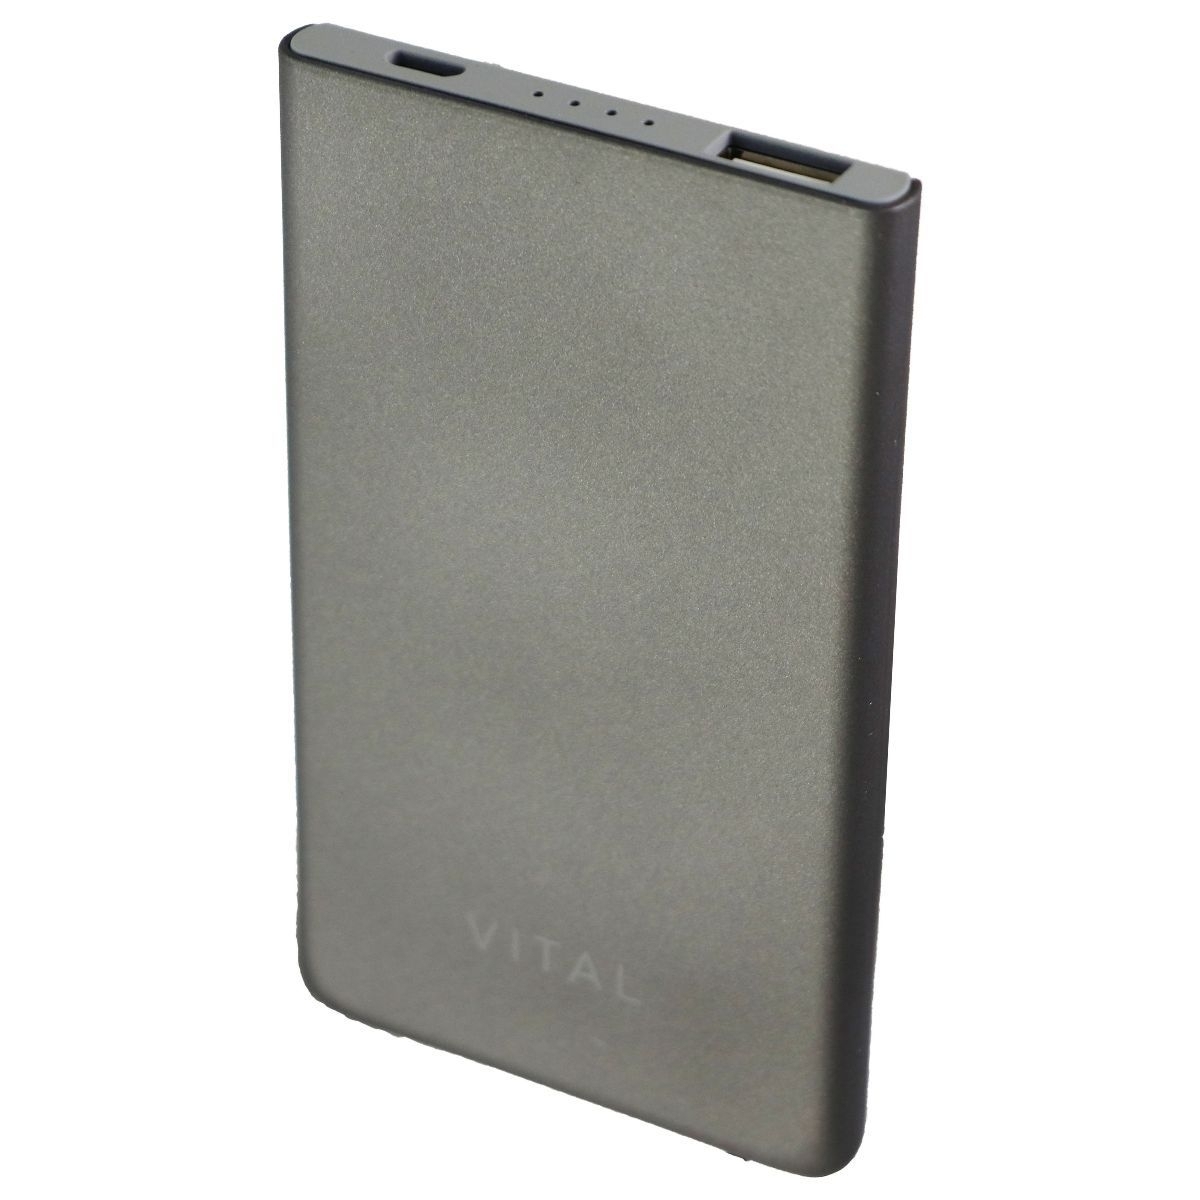 Vital 4,000mAh Power Bank Portable USB Charger Power Bank - Gray (Refurbished)